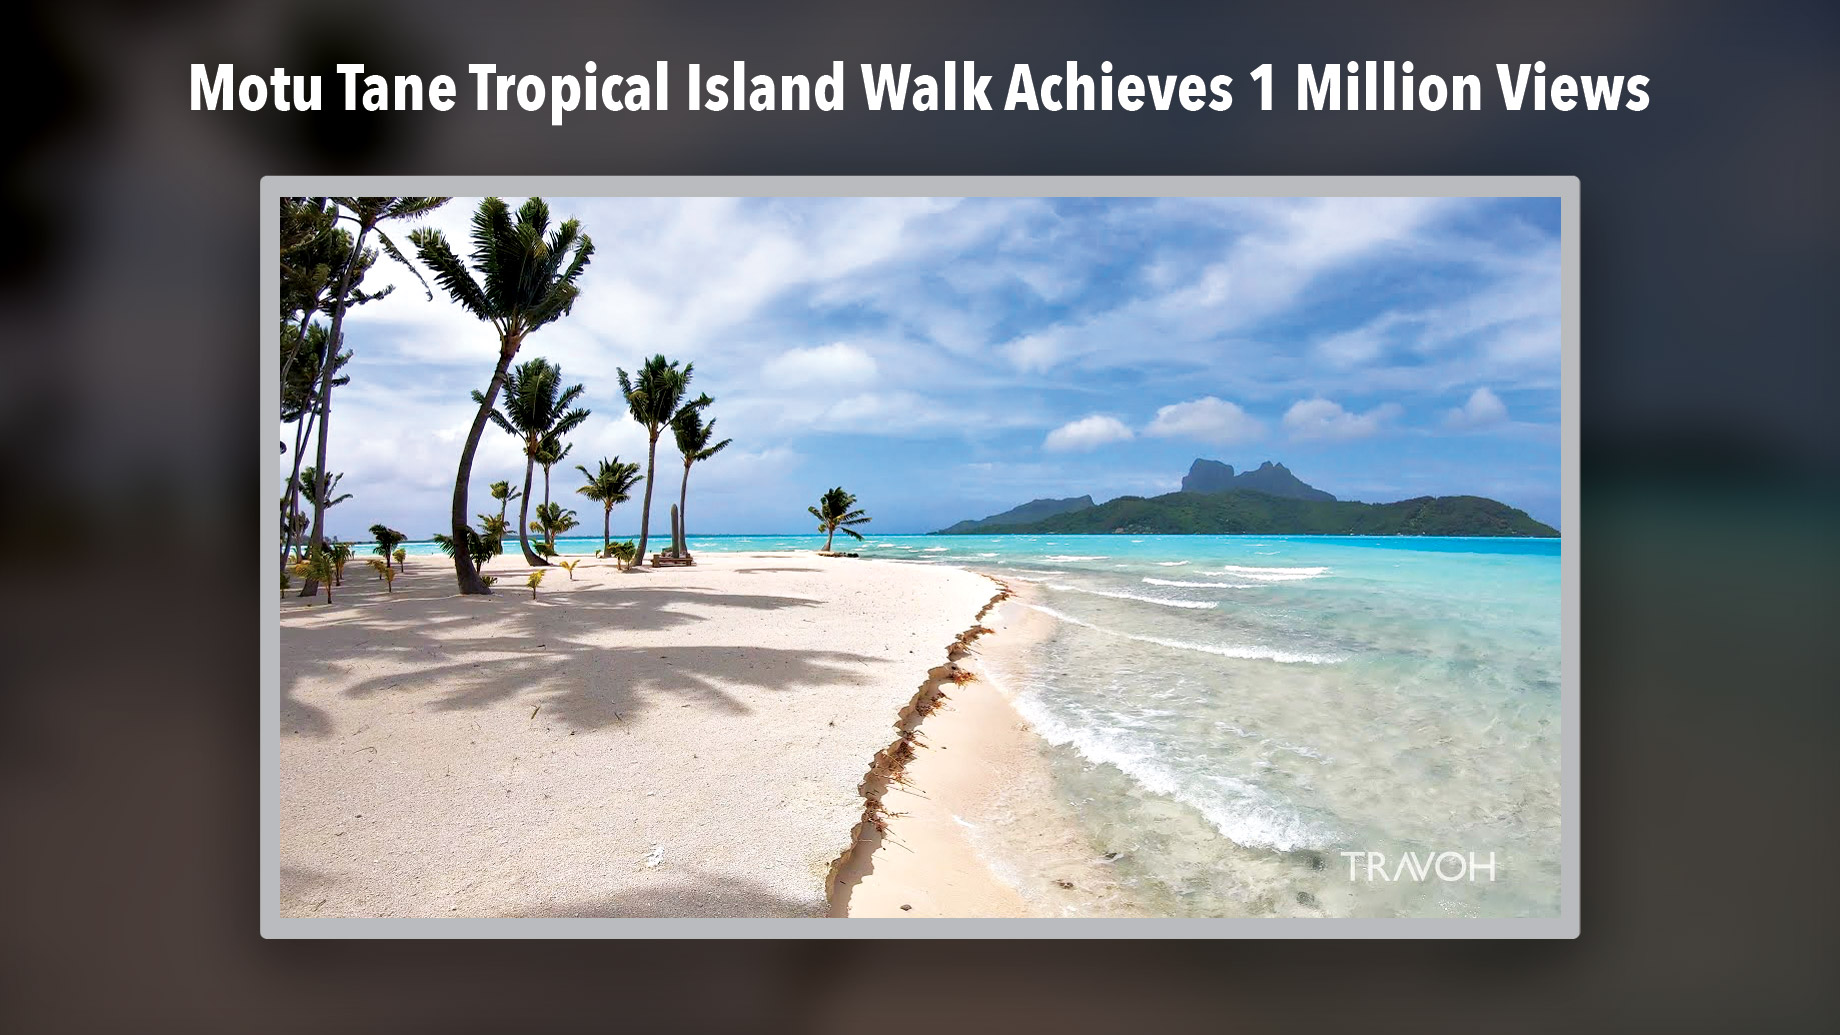 TRAVOH on YouTube - Motu Tane Tropical Island Walk Achieves 1 Million Views